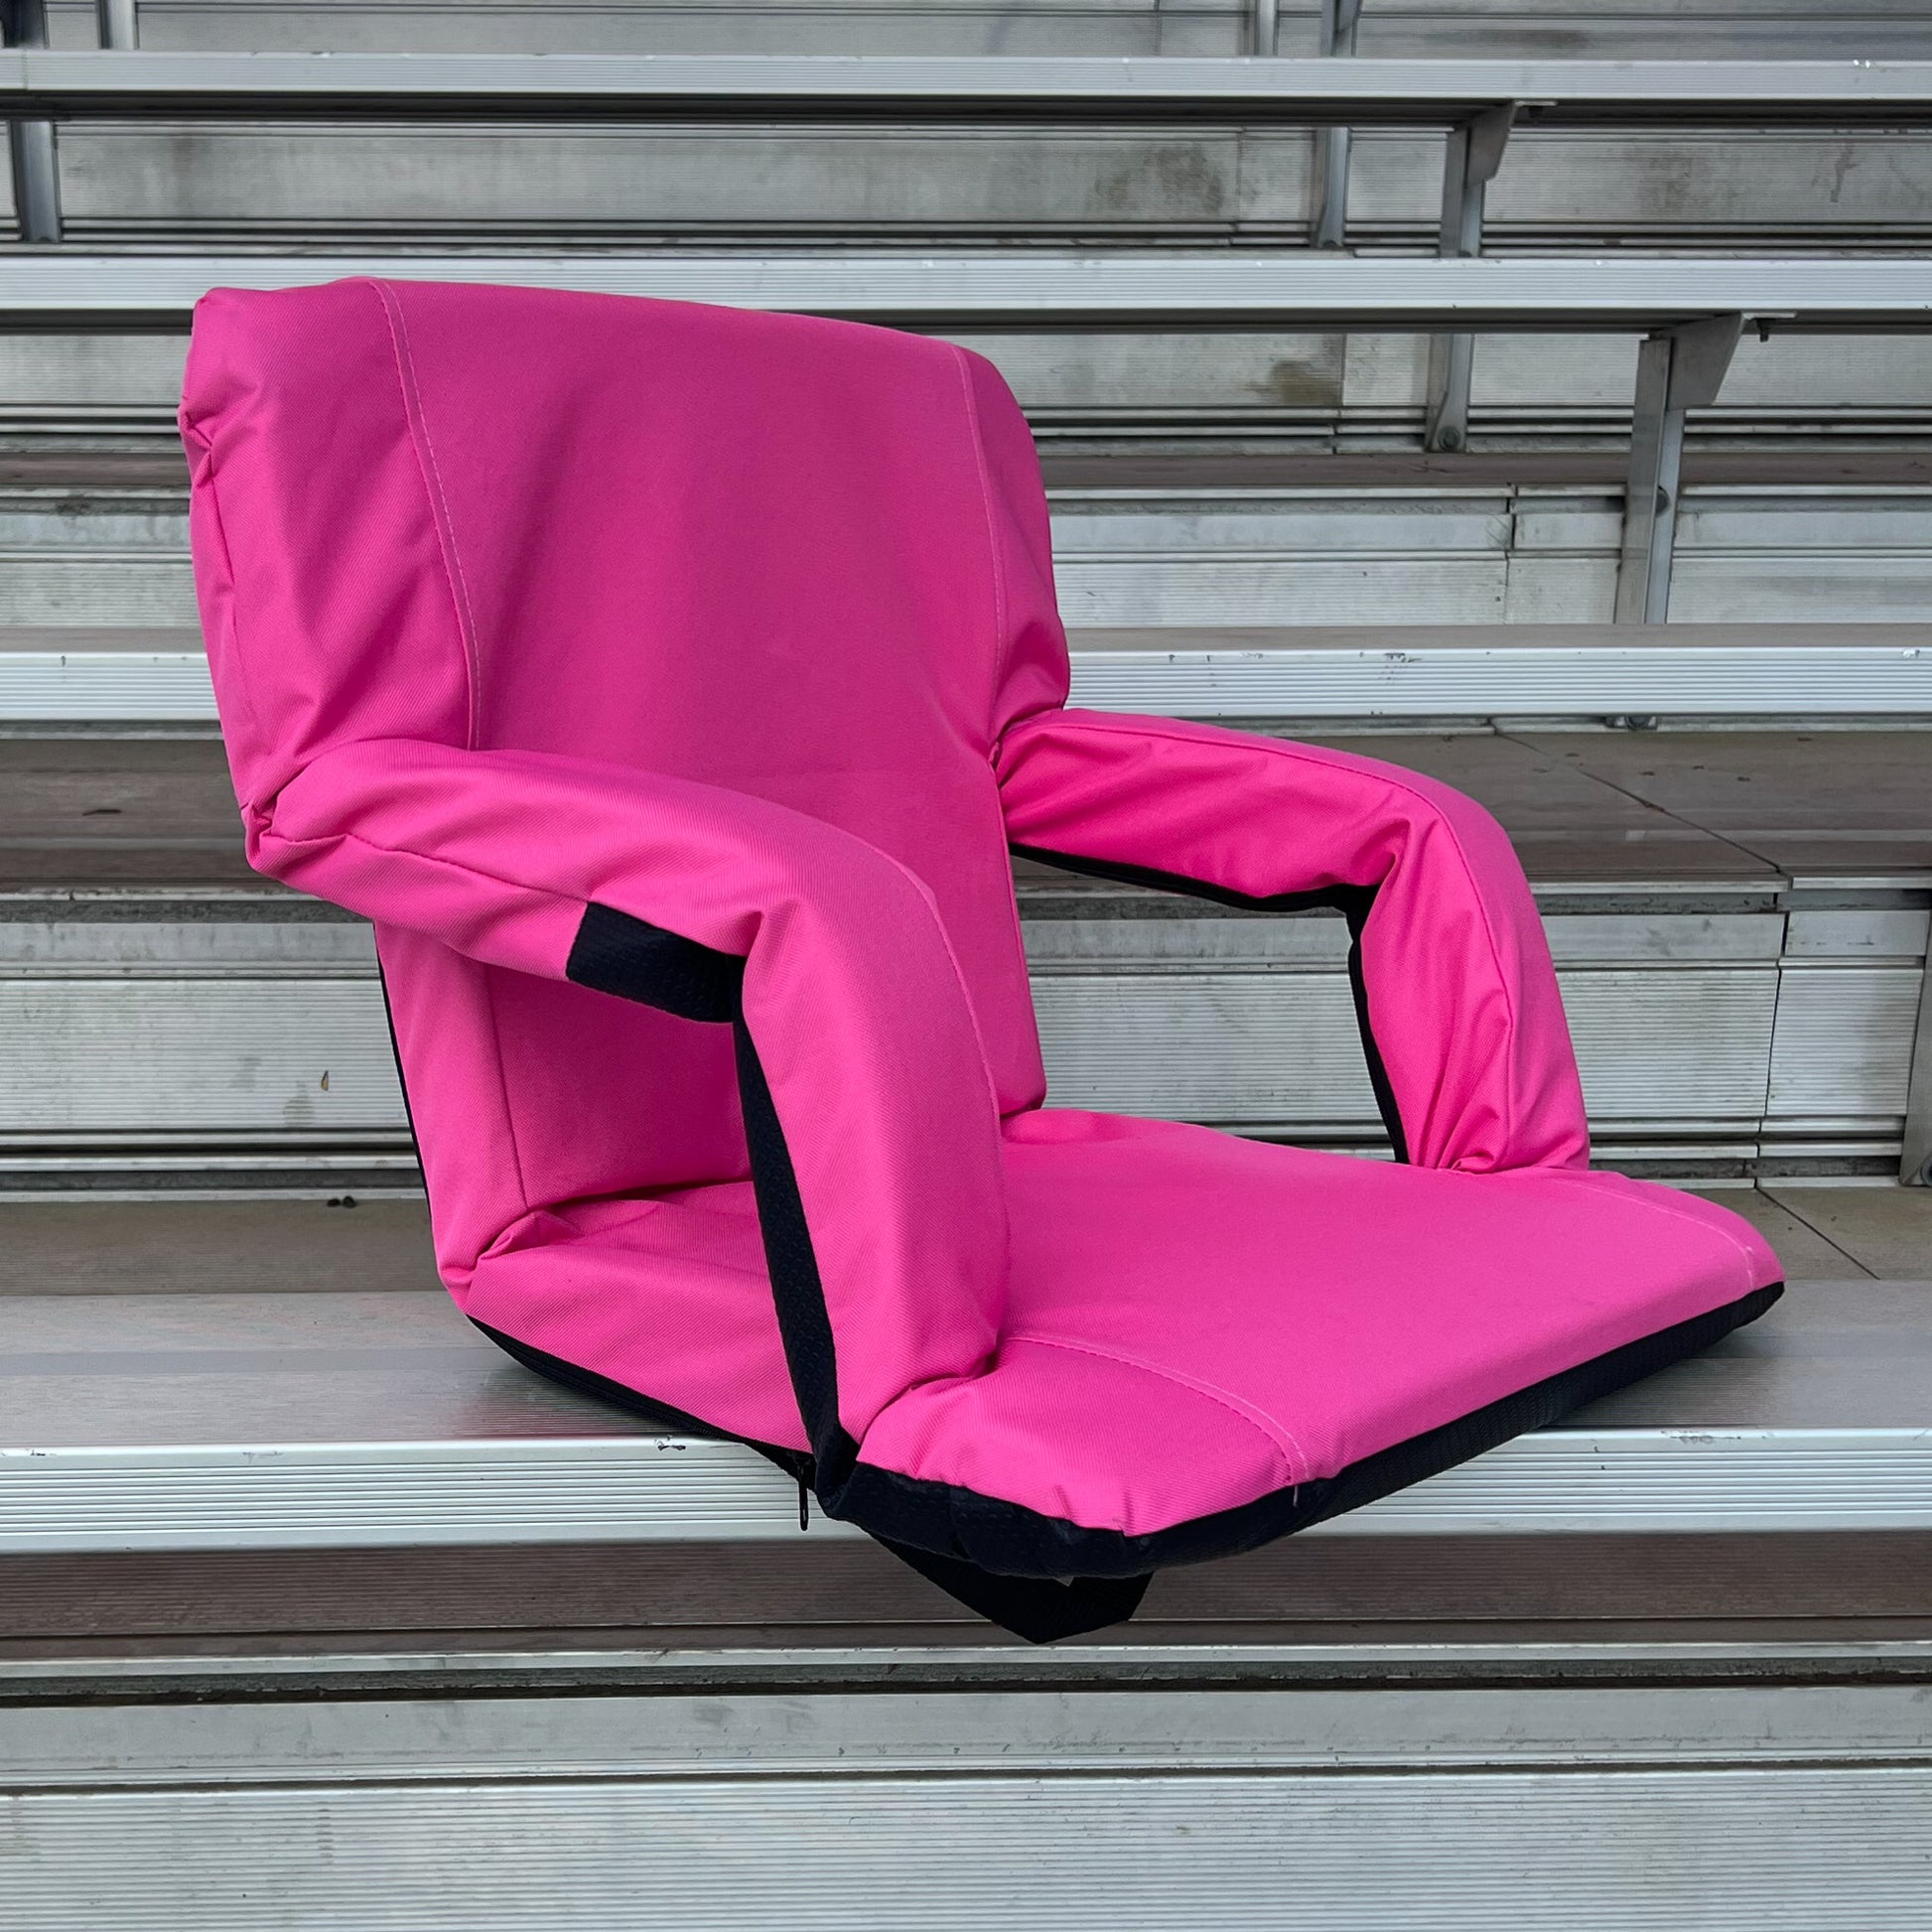 Thick Moisture-proof Bleachers Cushion Camouflage Stadium Seat Pad